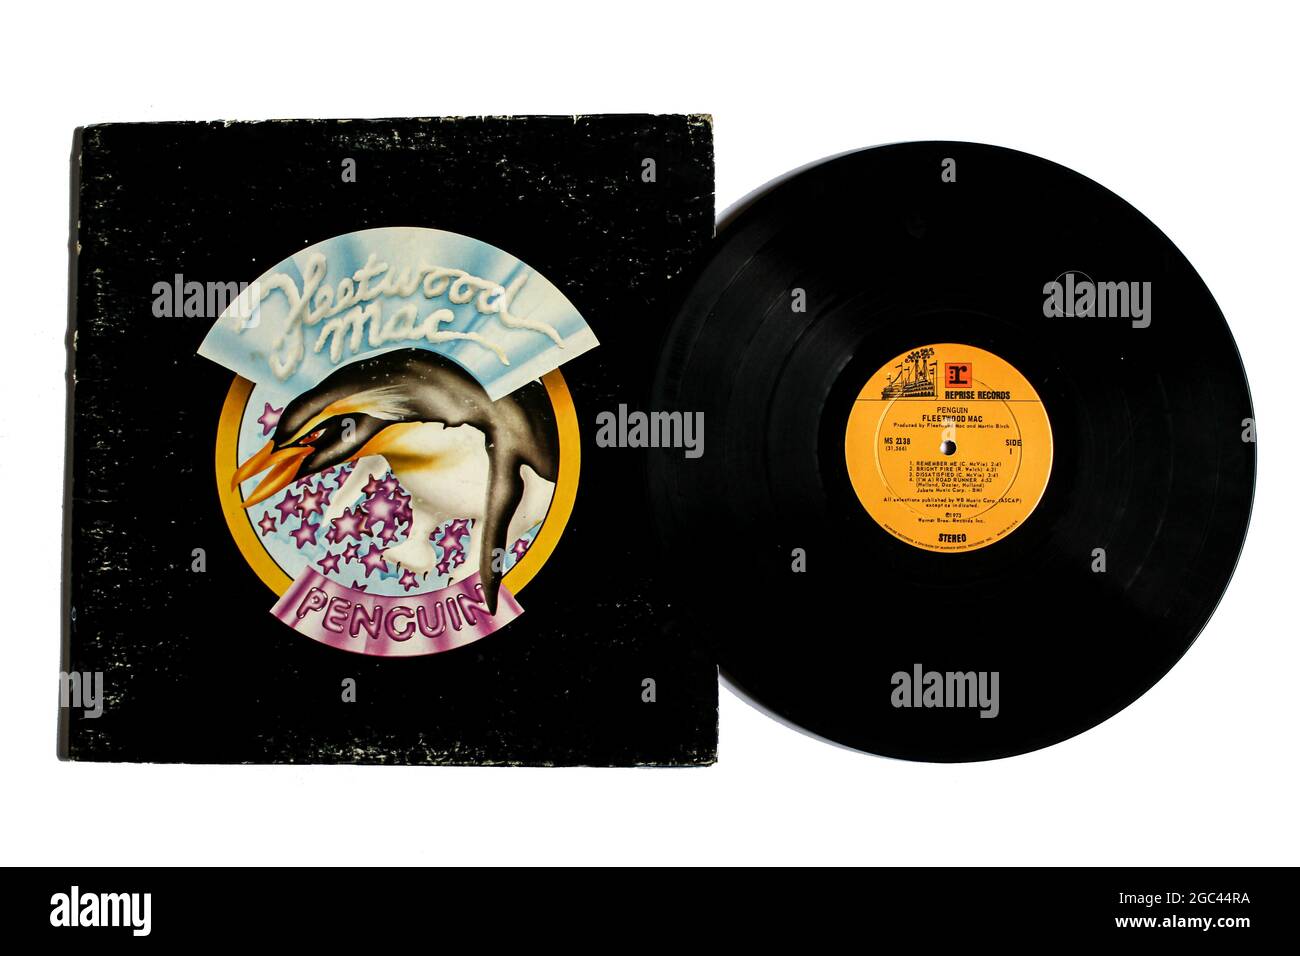 Rock and soft rock band, Fleetwood Mac álbum de música en disco LP de vinilo. Título: Penguin álbum portada Foto de stock